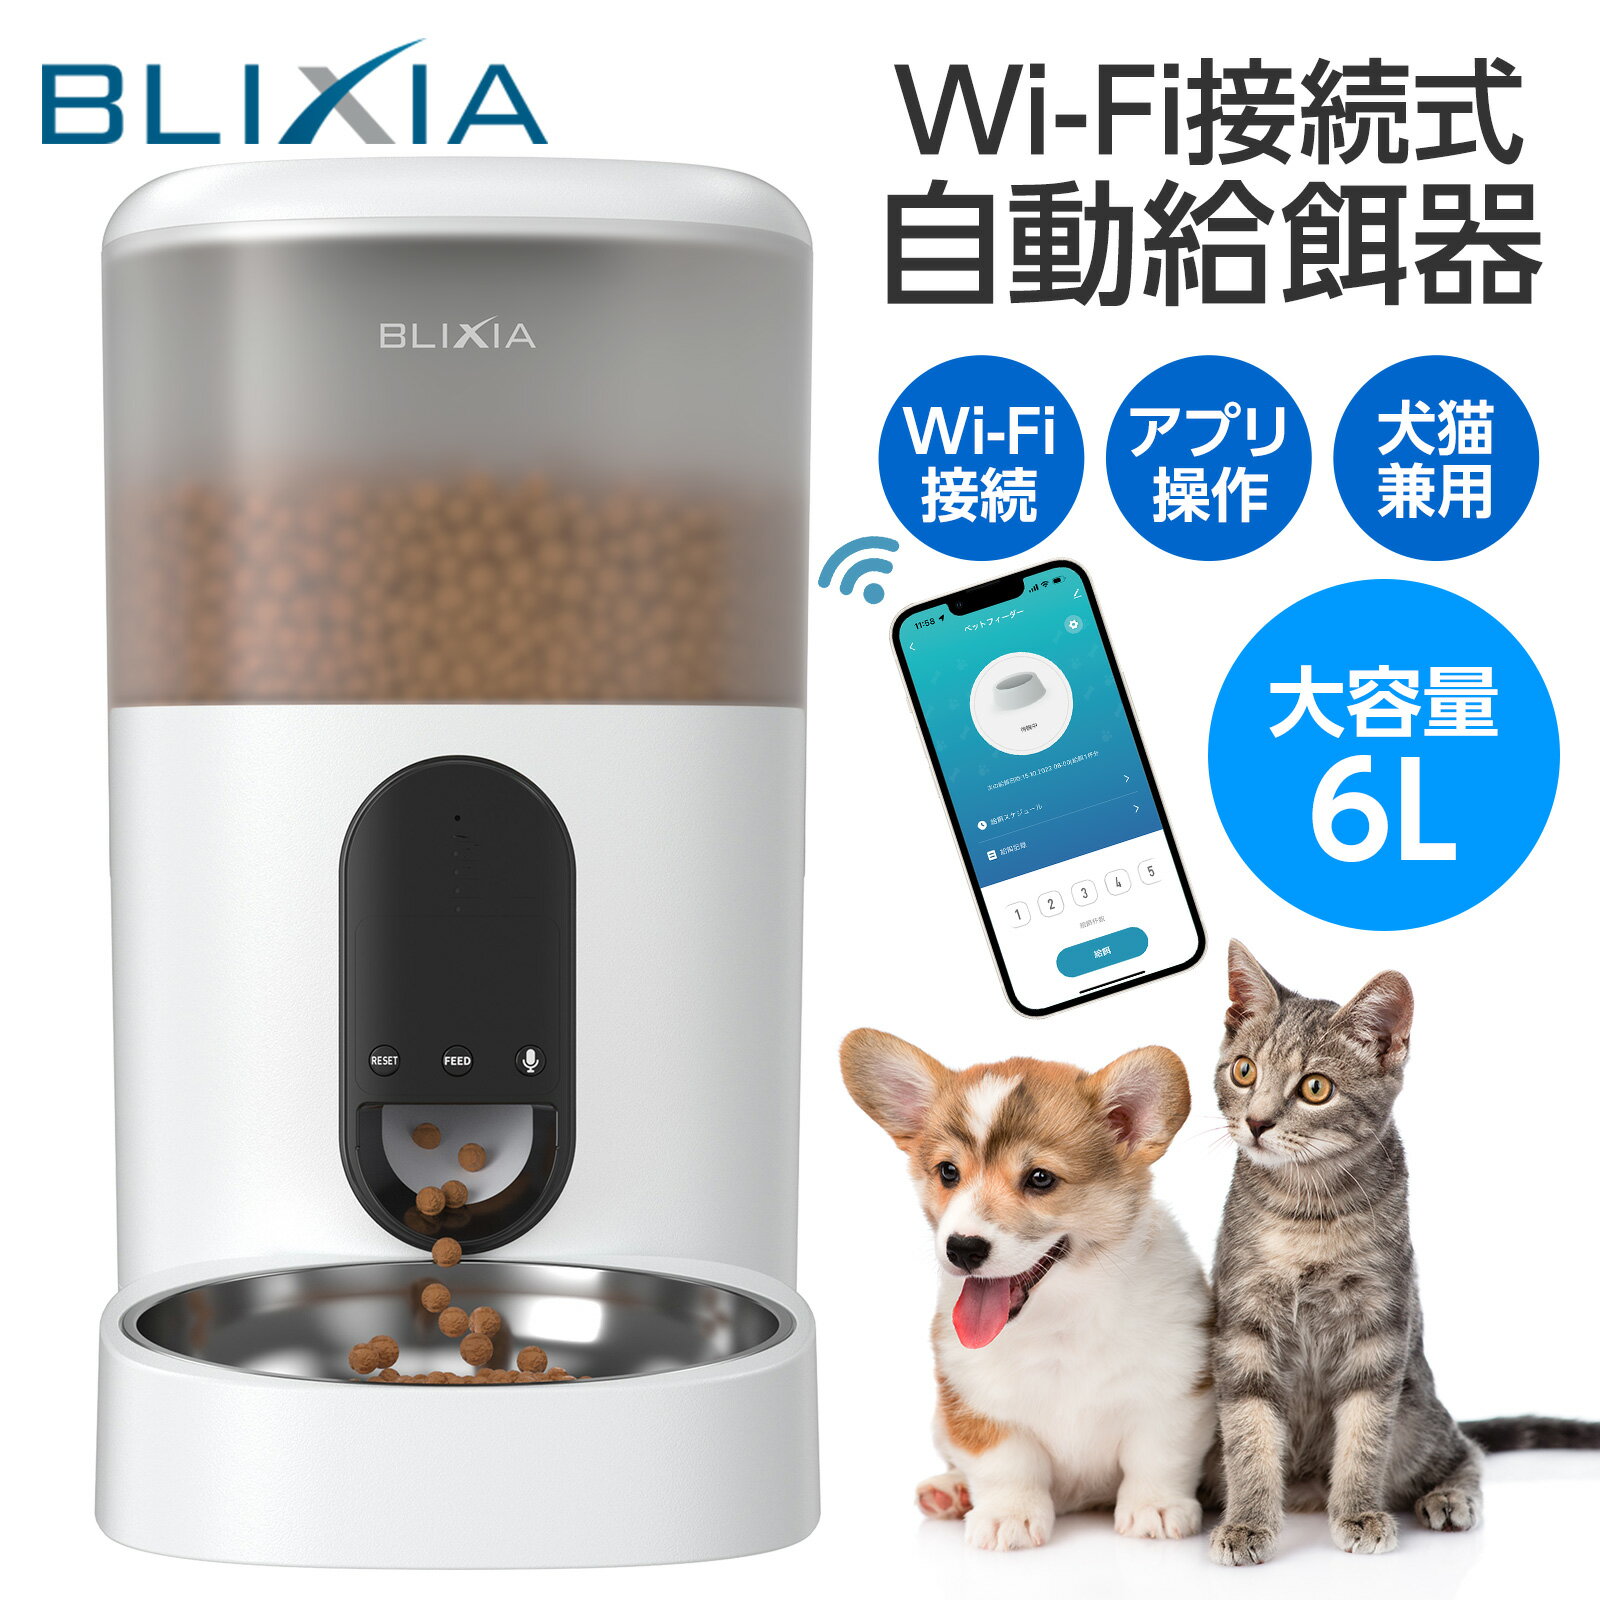 BLIXIA公式 自動給餌器 猫 大中小型犬用 Wi-Fi接続 ペットフィーダー 大容量6L 定時定量 ドライフード専用 健康管理 エサやり 手動給餌可 録音可 スマホコントロール 留守番 ステンレストレー付き 2WAY給電 安心の日本国内サポート